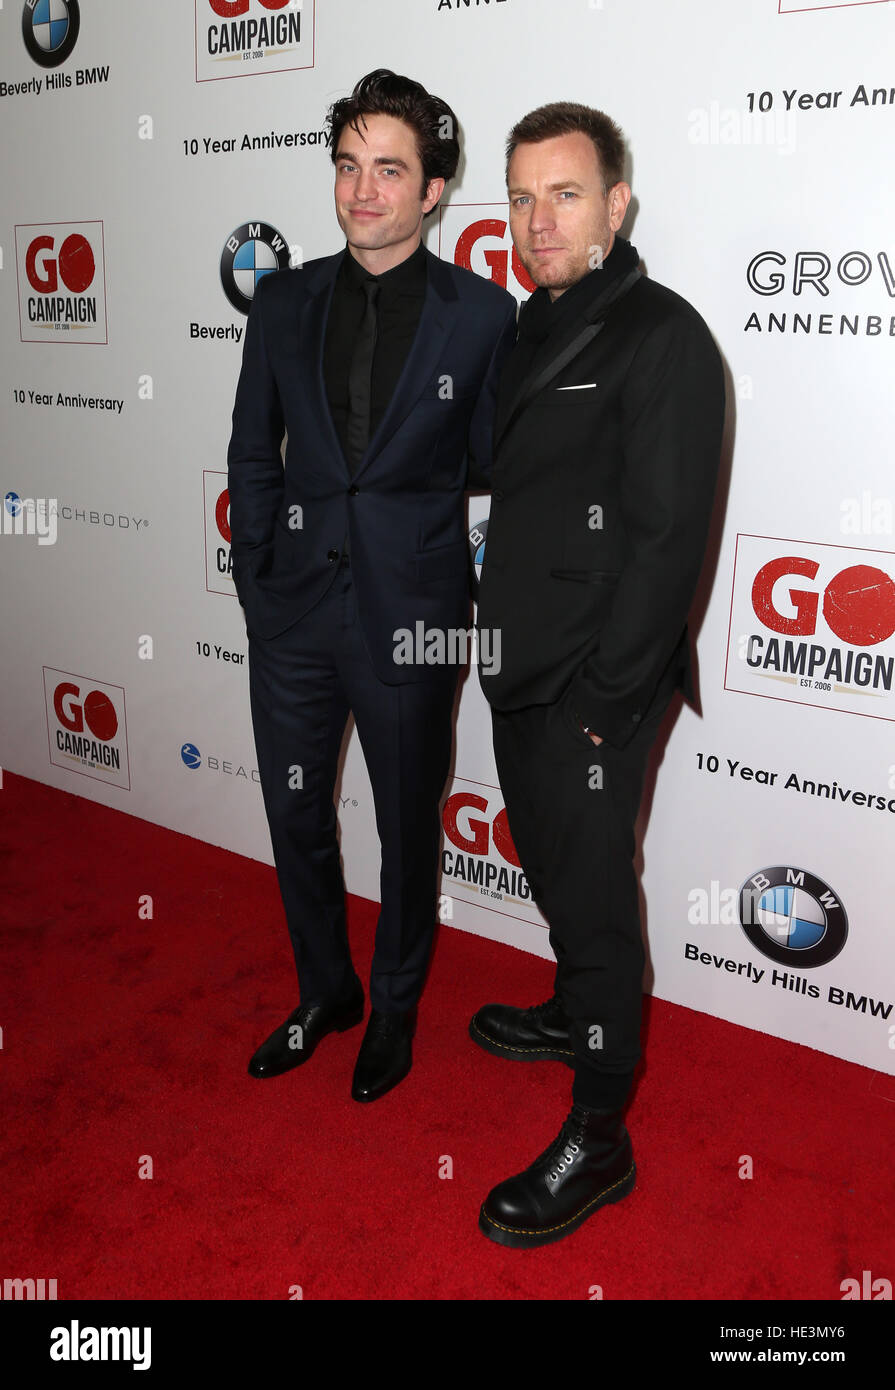 10th Annual GO Campaign Gala  Featuring: Robert Pattinson, Ewan McGregor Where: Los Angeles, California, United States When: 05 Nov 2016 Stock Photo